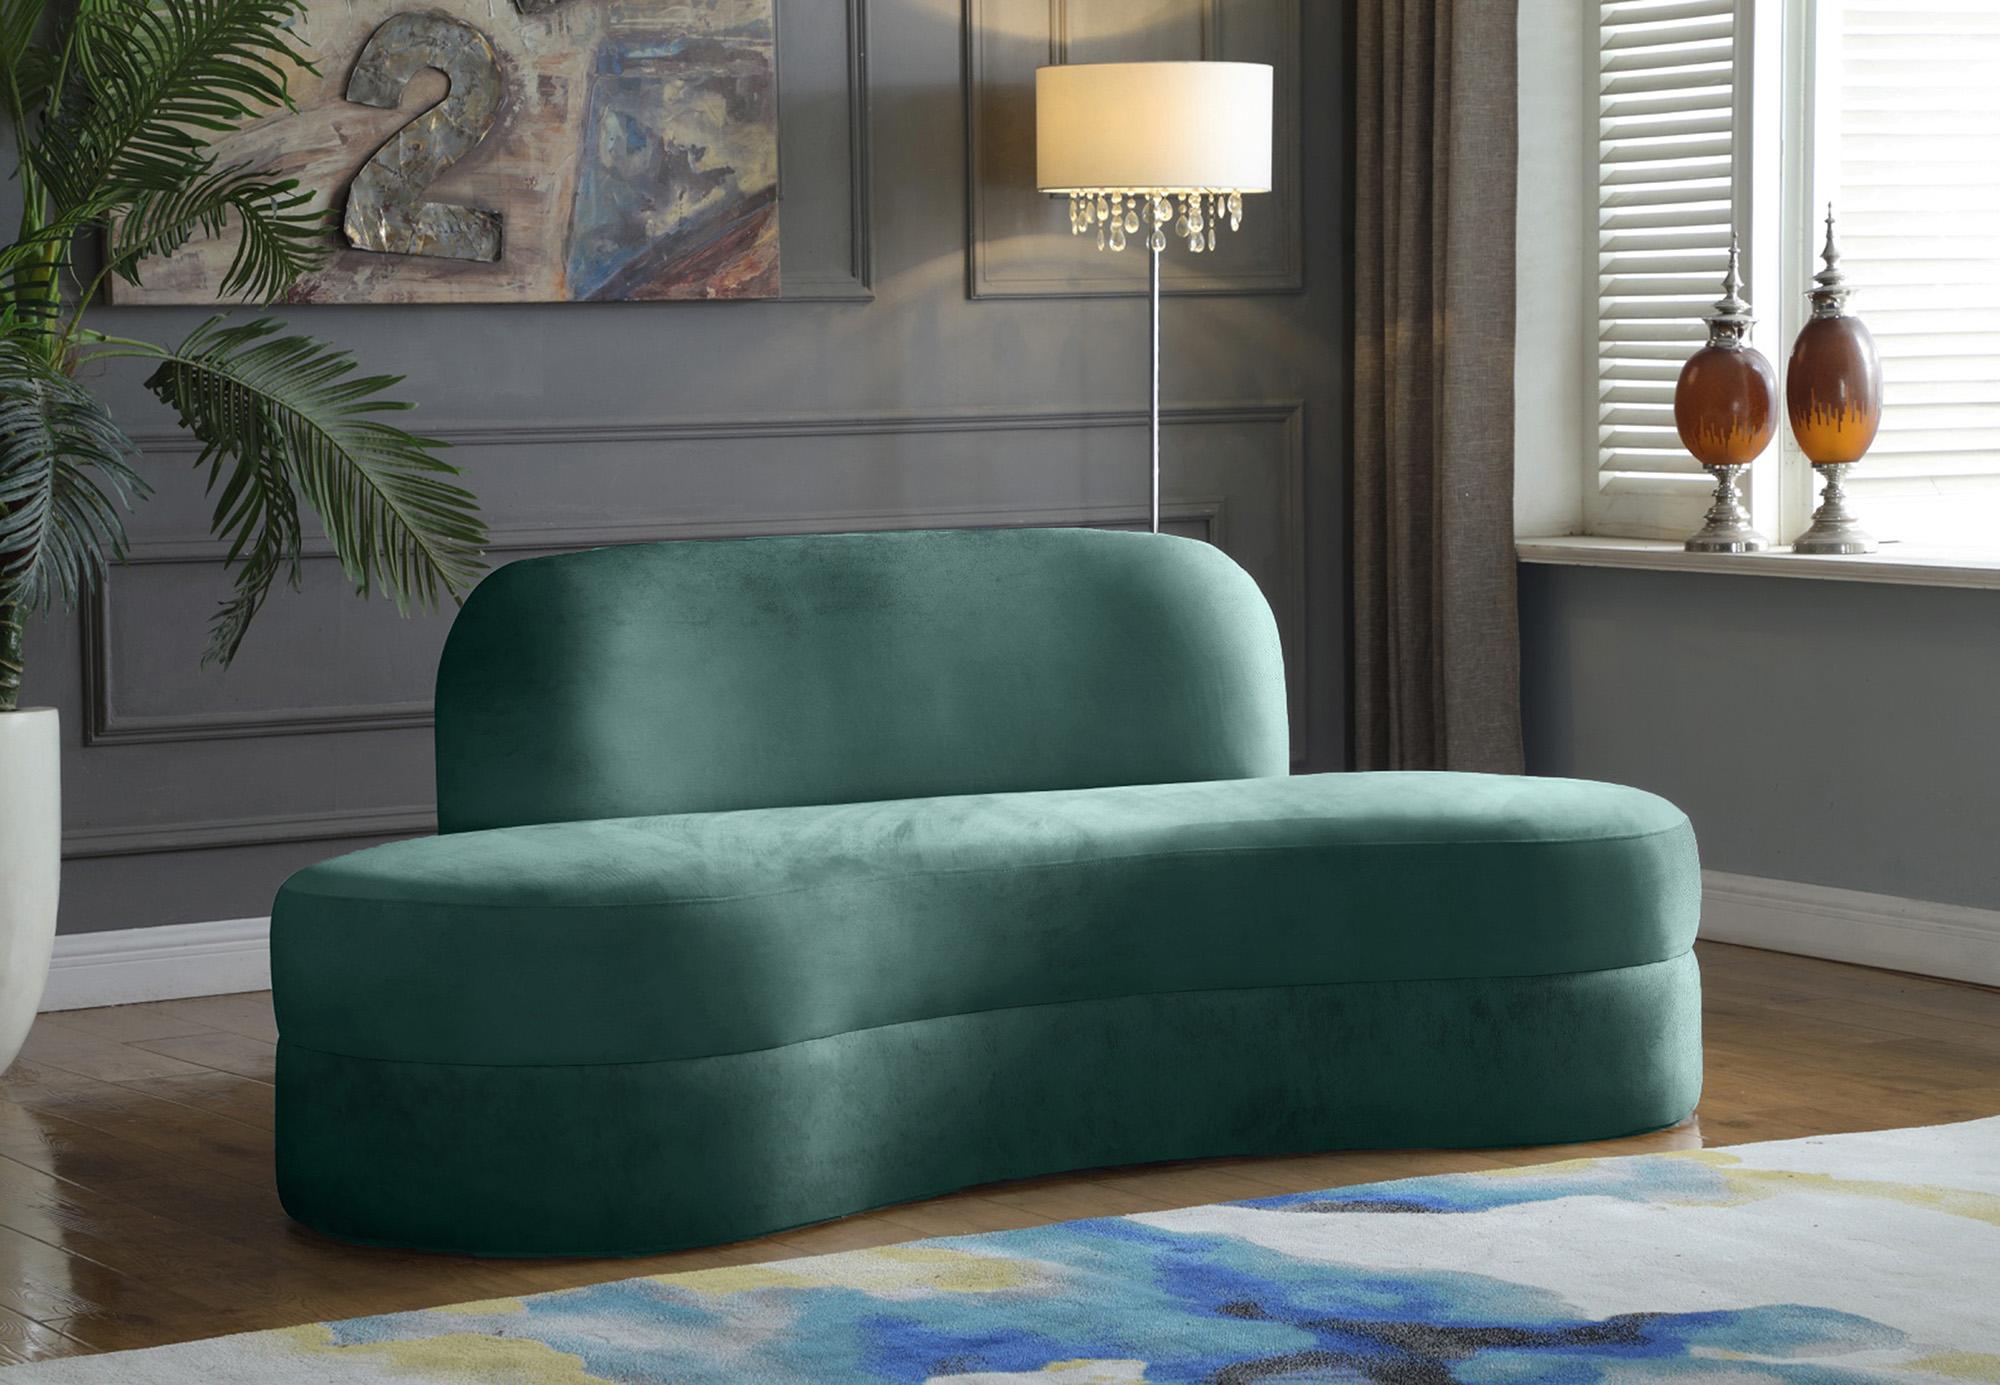 

    
606Mint-S Ultra Vogue Mint Velvet Lounge Sofa MITZY 606Mint-S Meridian Contemporary
